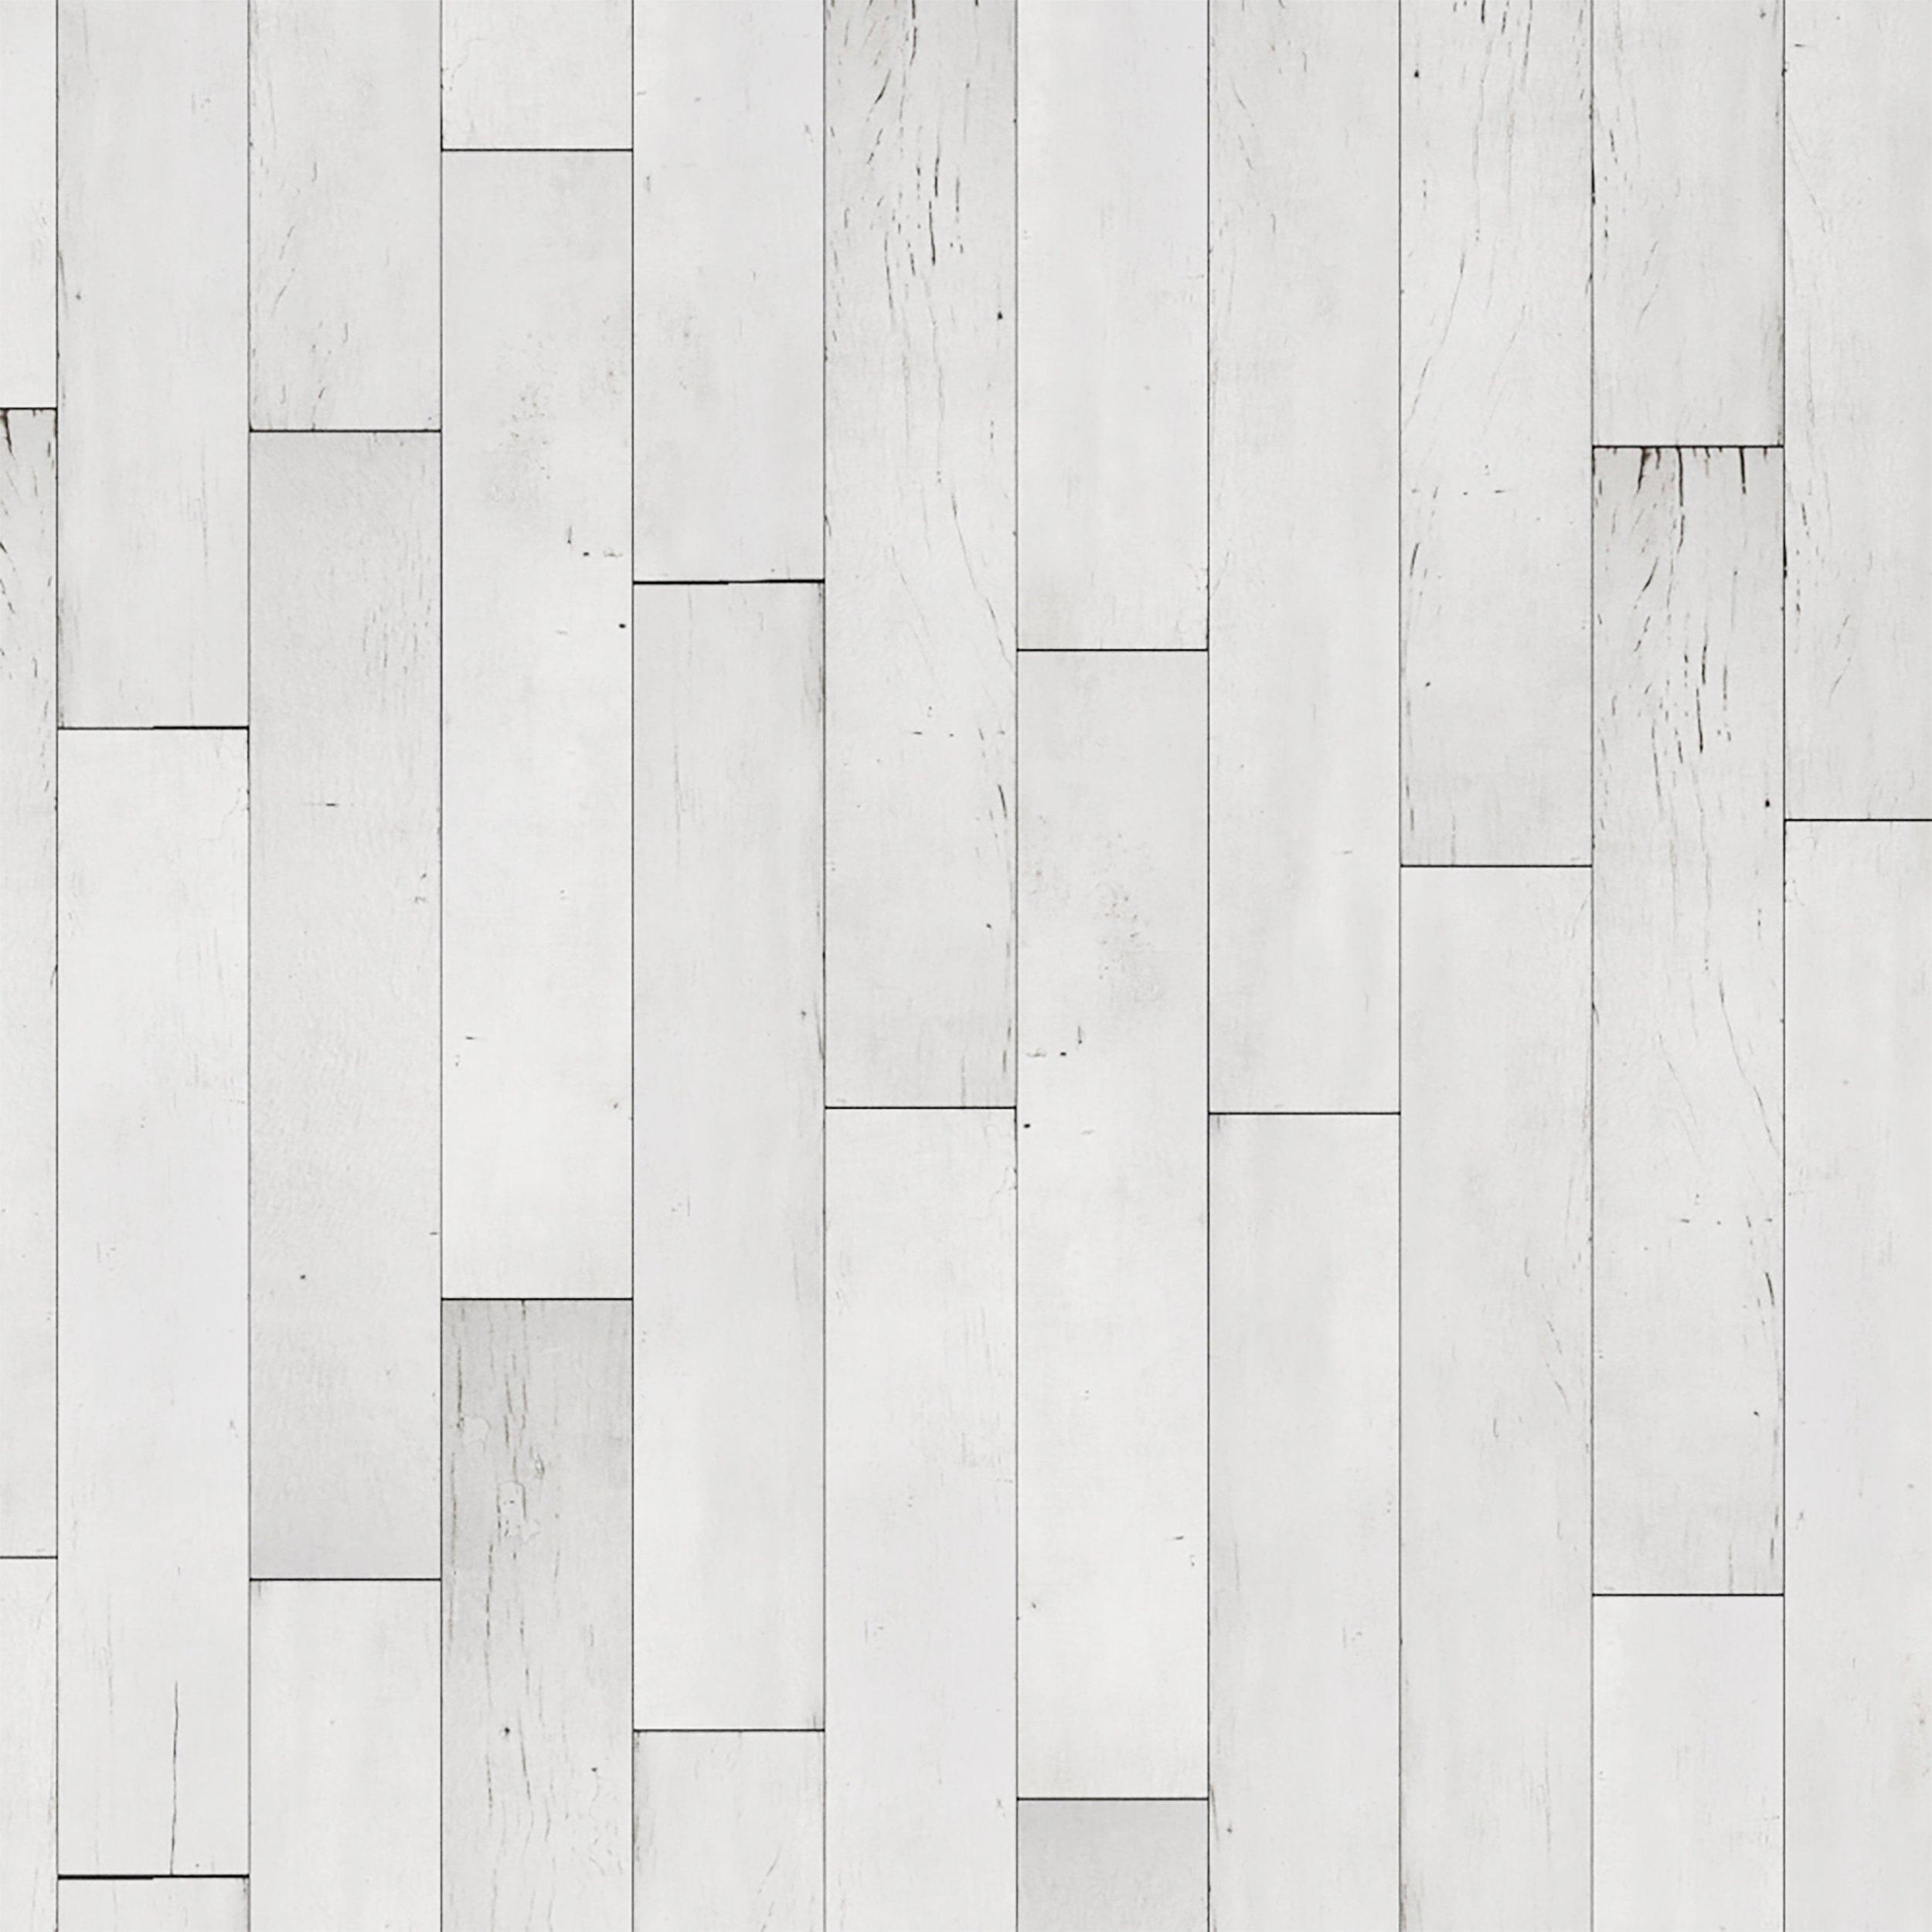 white wood flooring texture